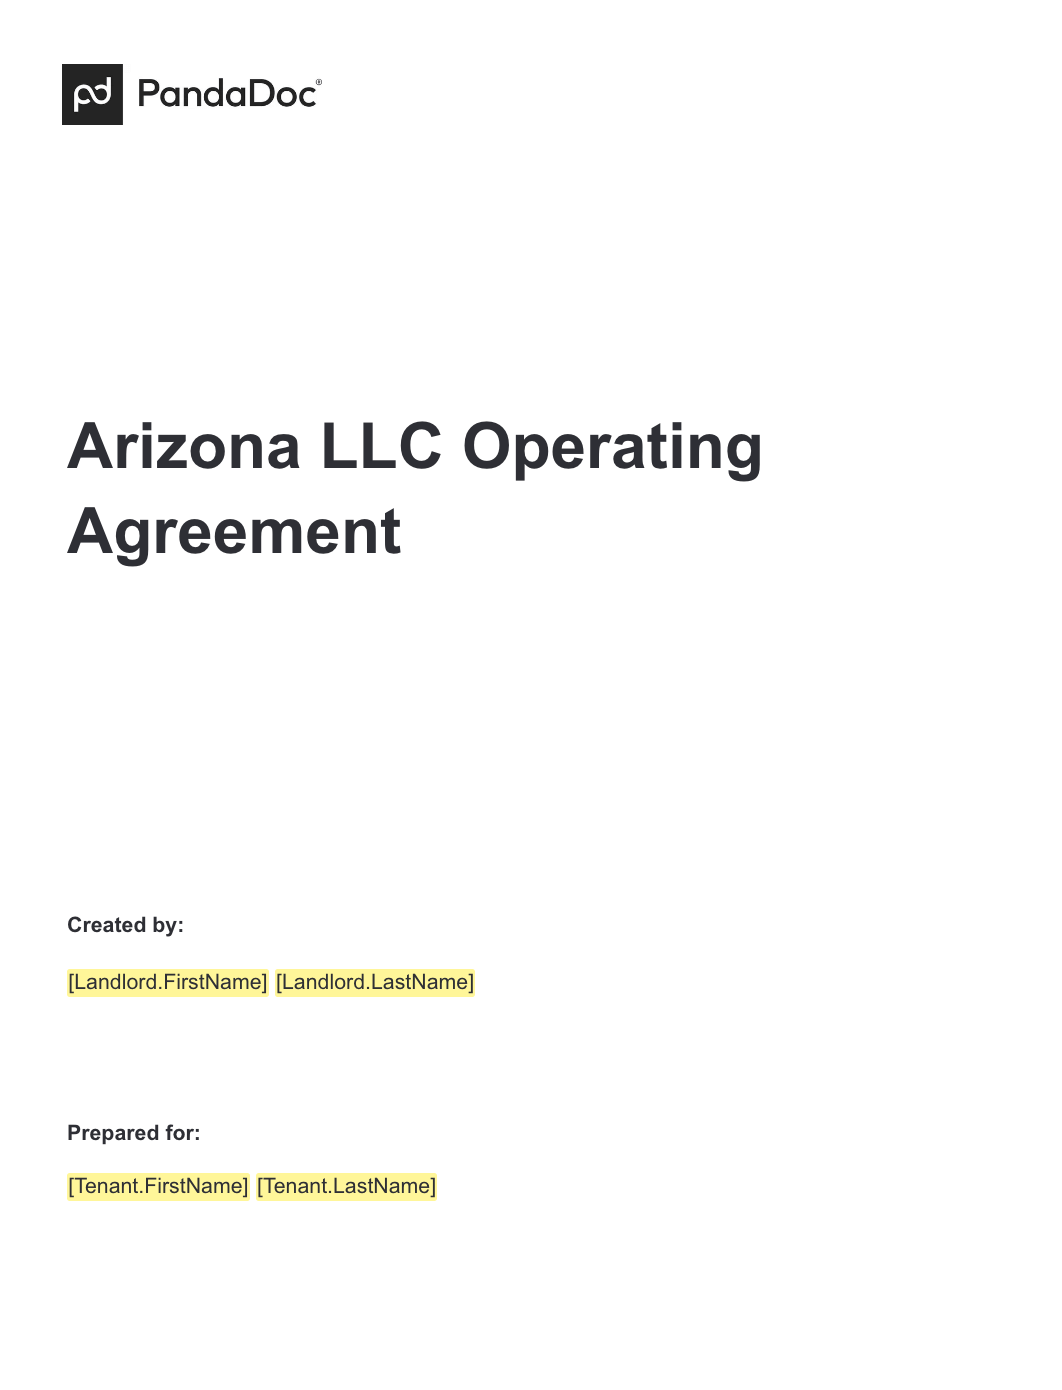 Arizona LLC Operating Agreement 